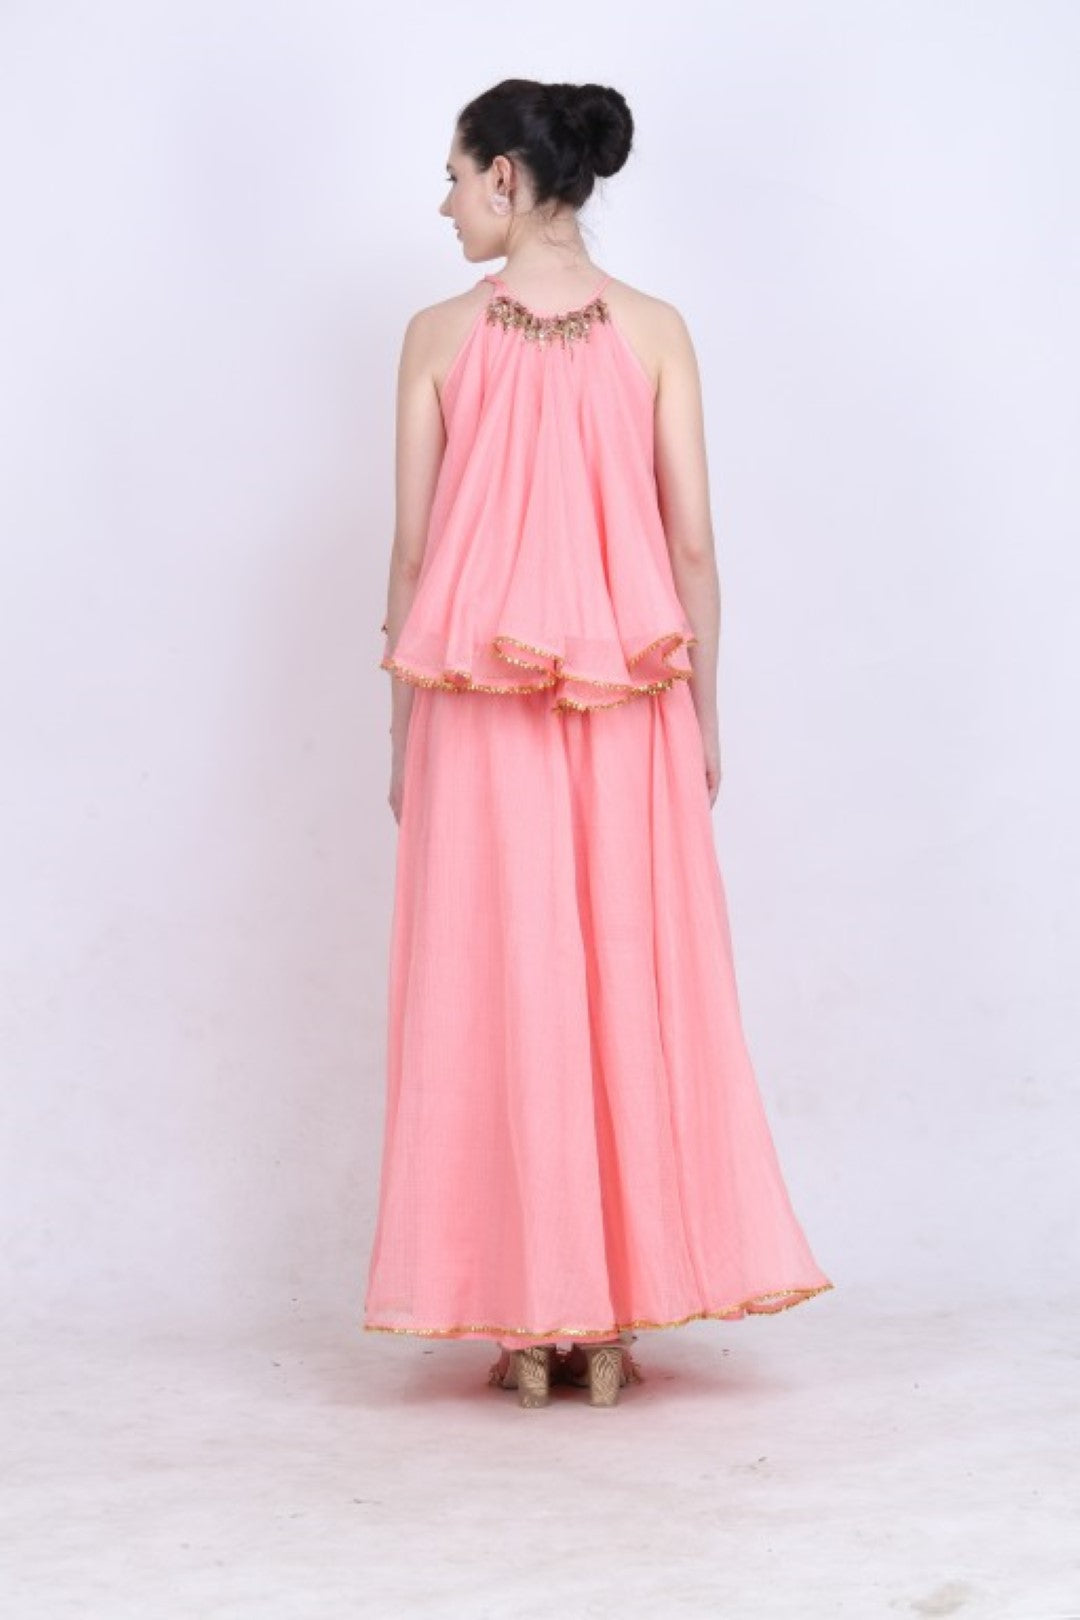 Rose pink kota doria halter neck top with a kota doria skirt with gota lace detailing.